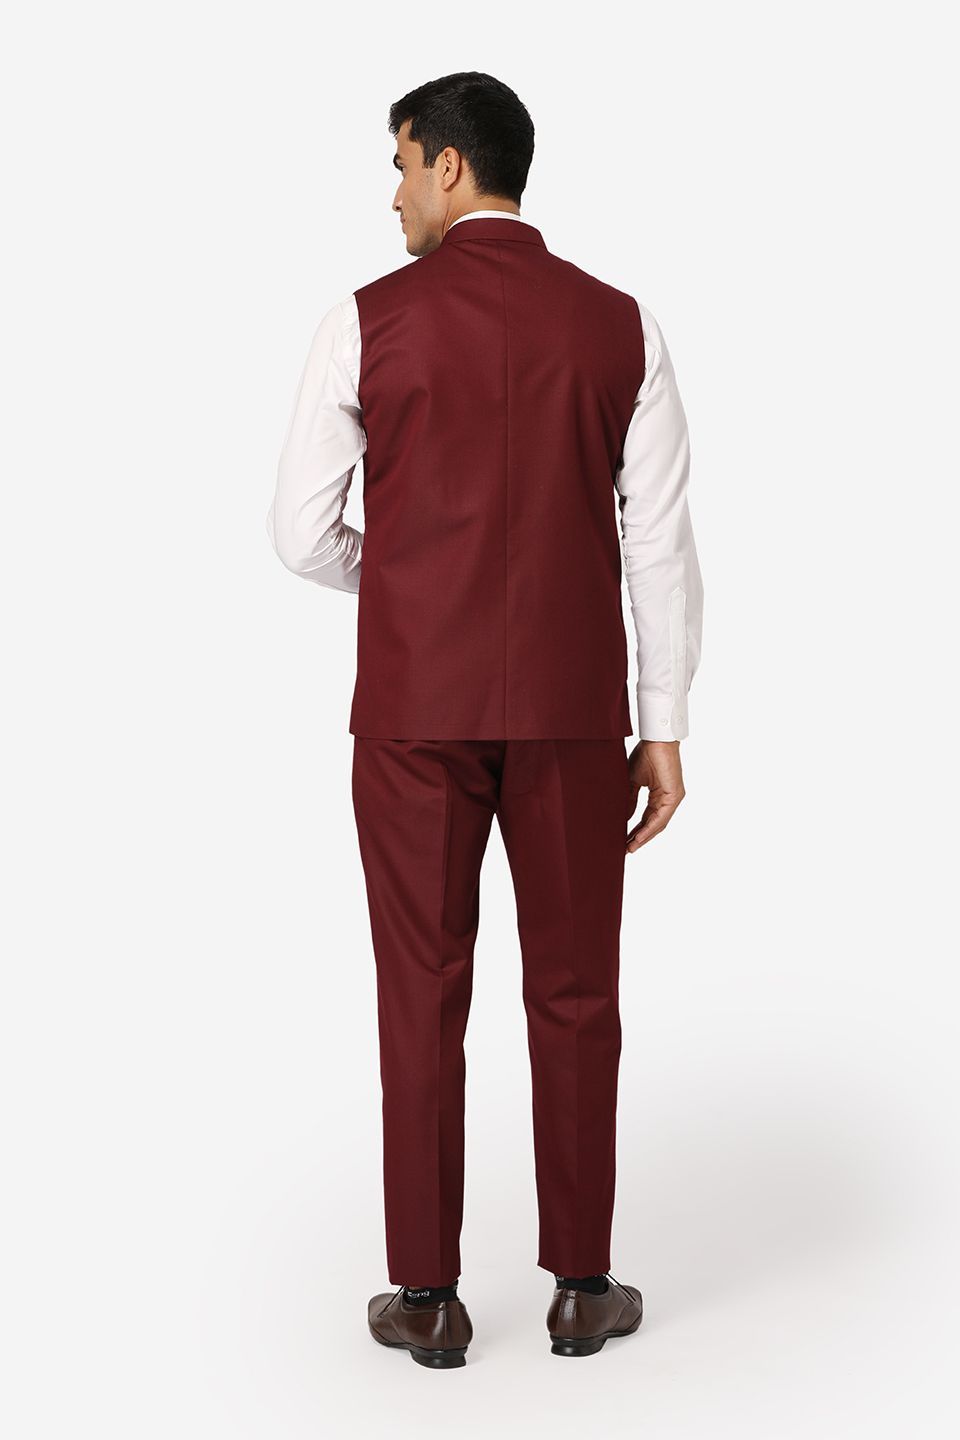 WINTAGE Men's Poly Cotton Casual and Evening Vest & Pant Set : Purple